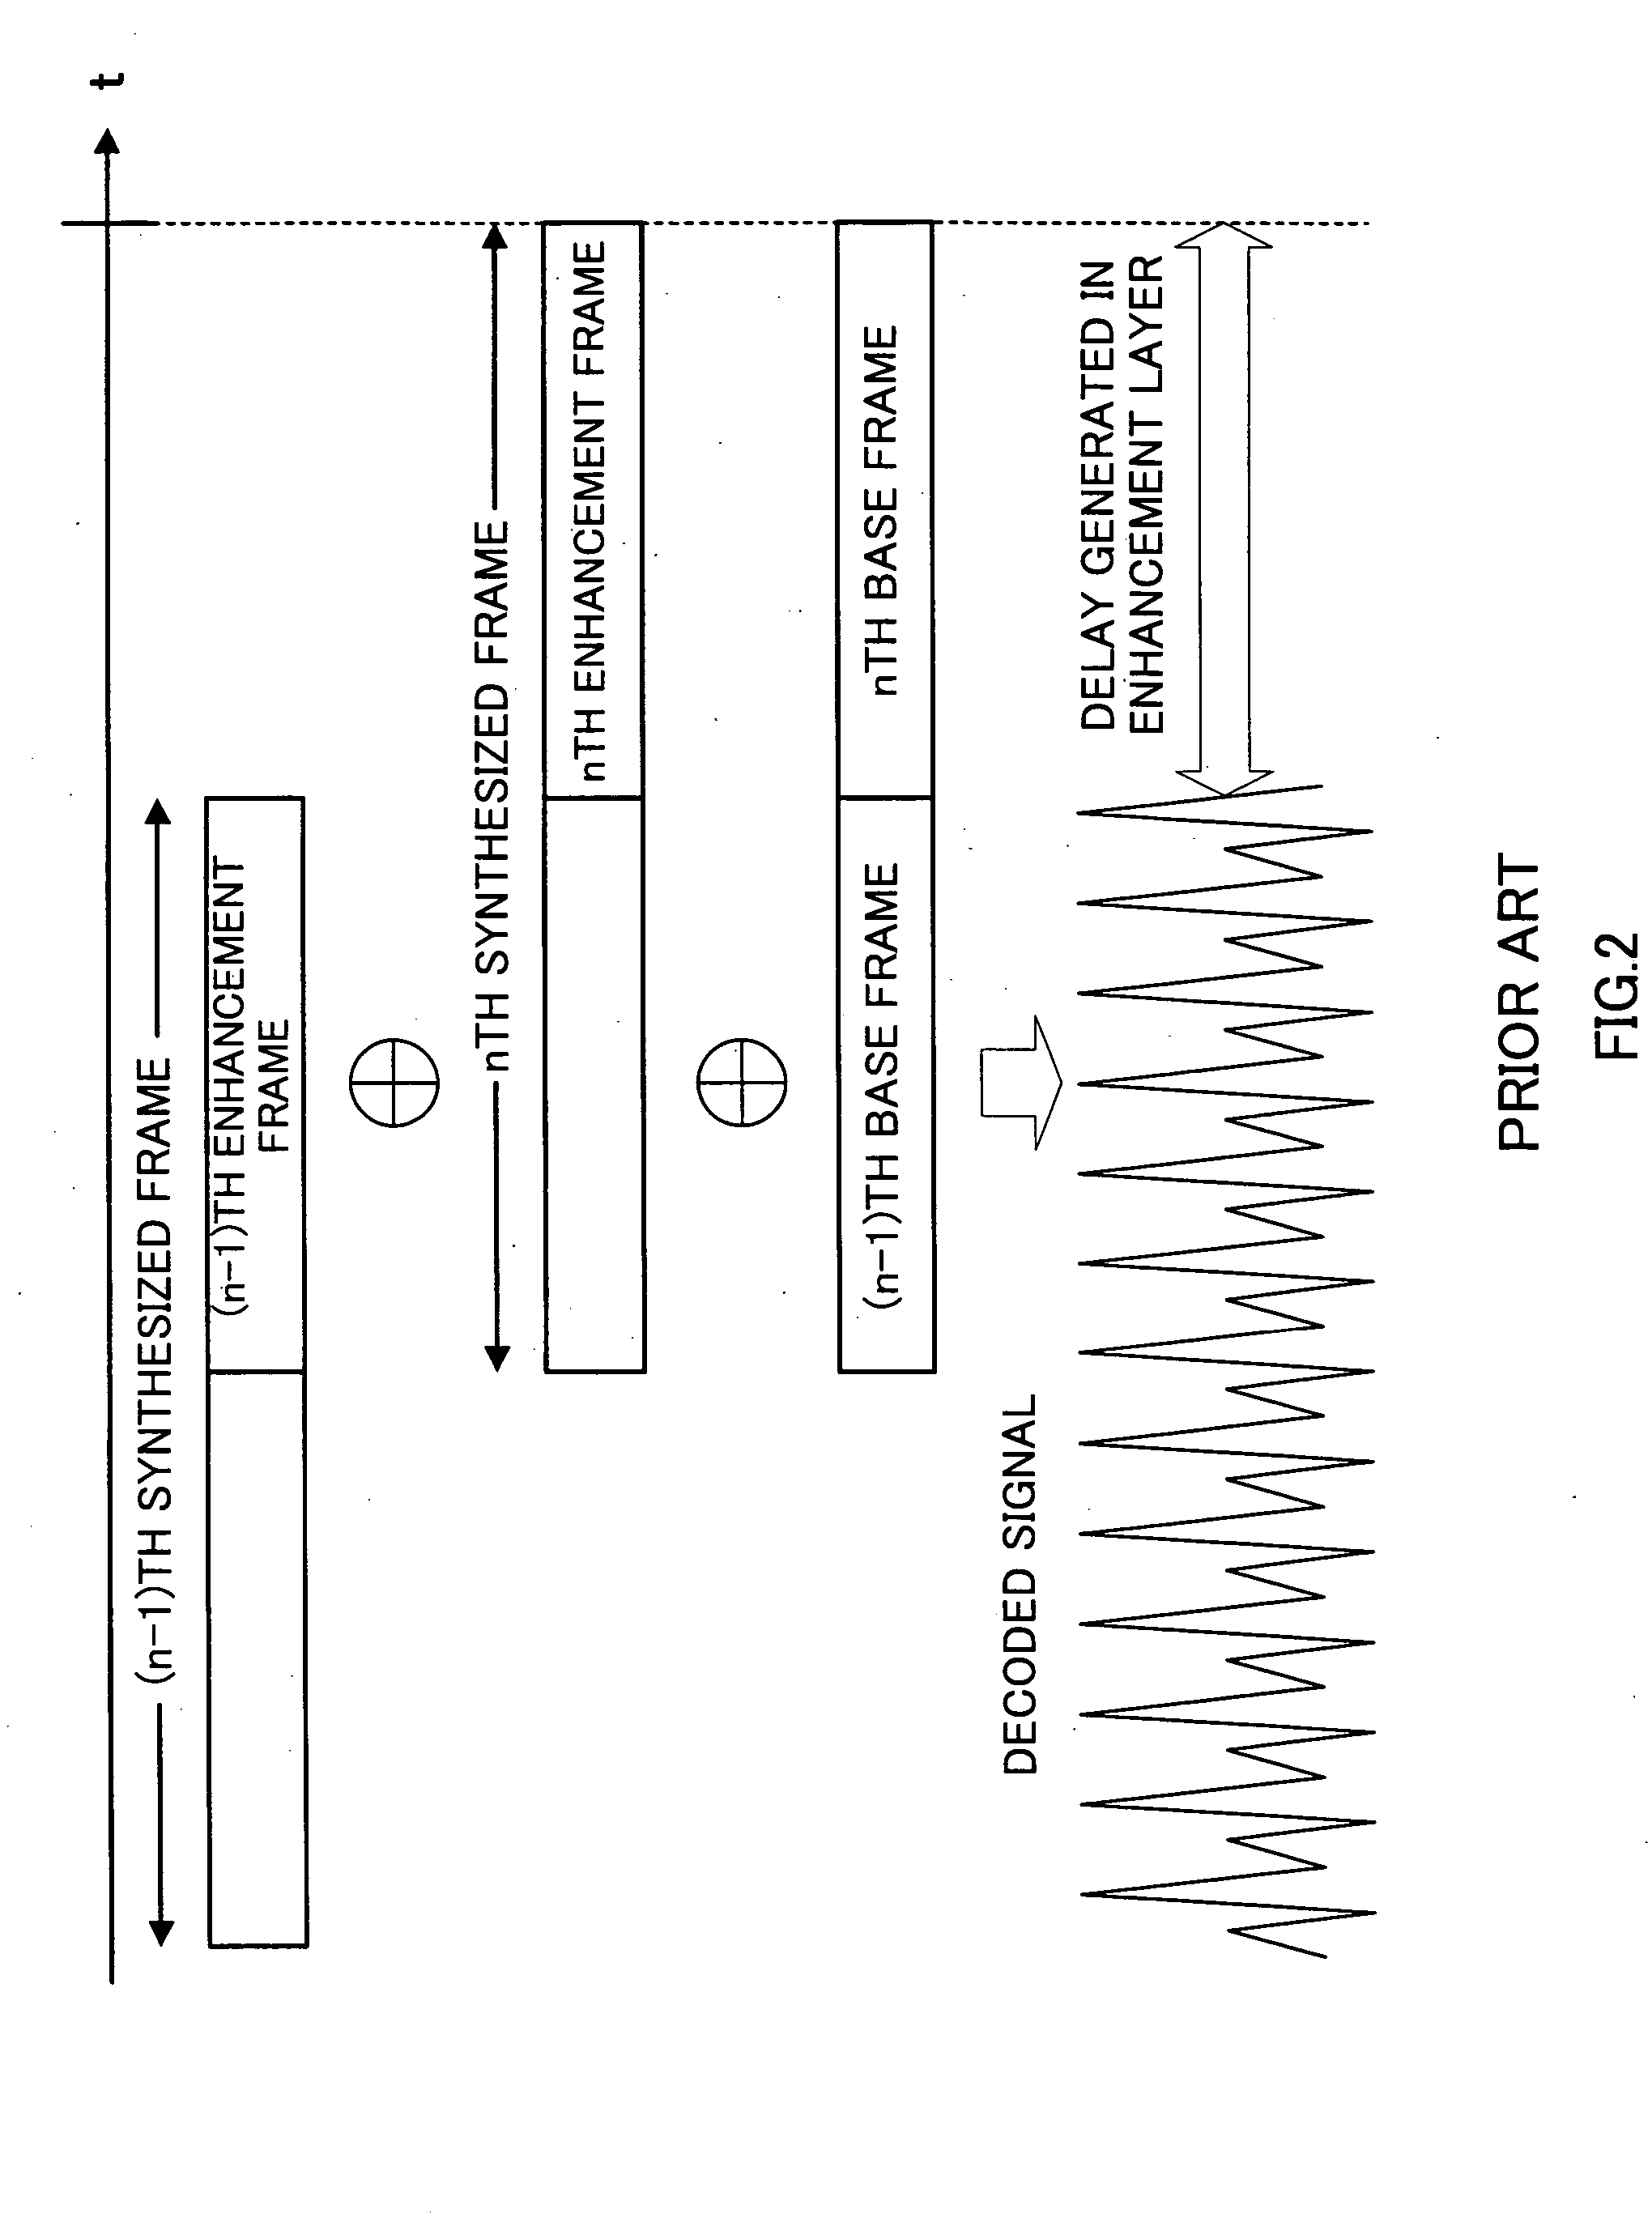 Sound encoding apparatus and sound encoding method